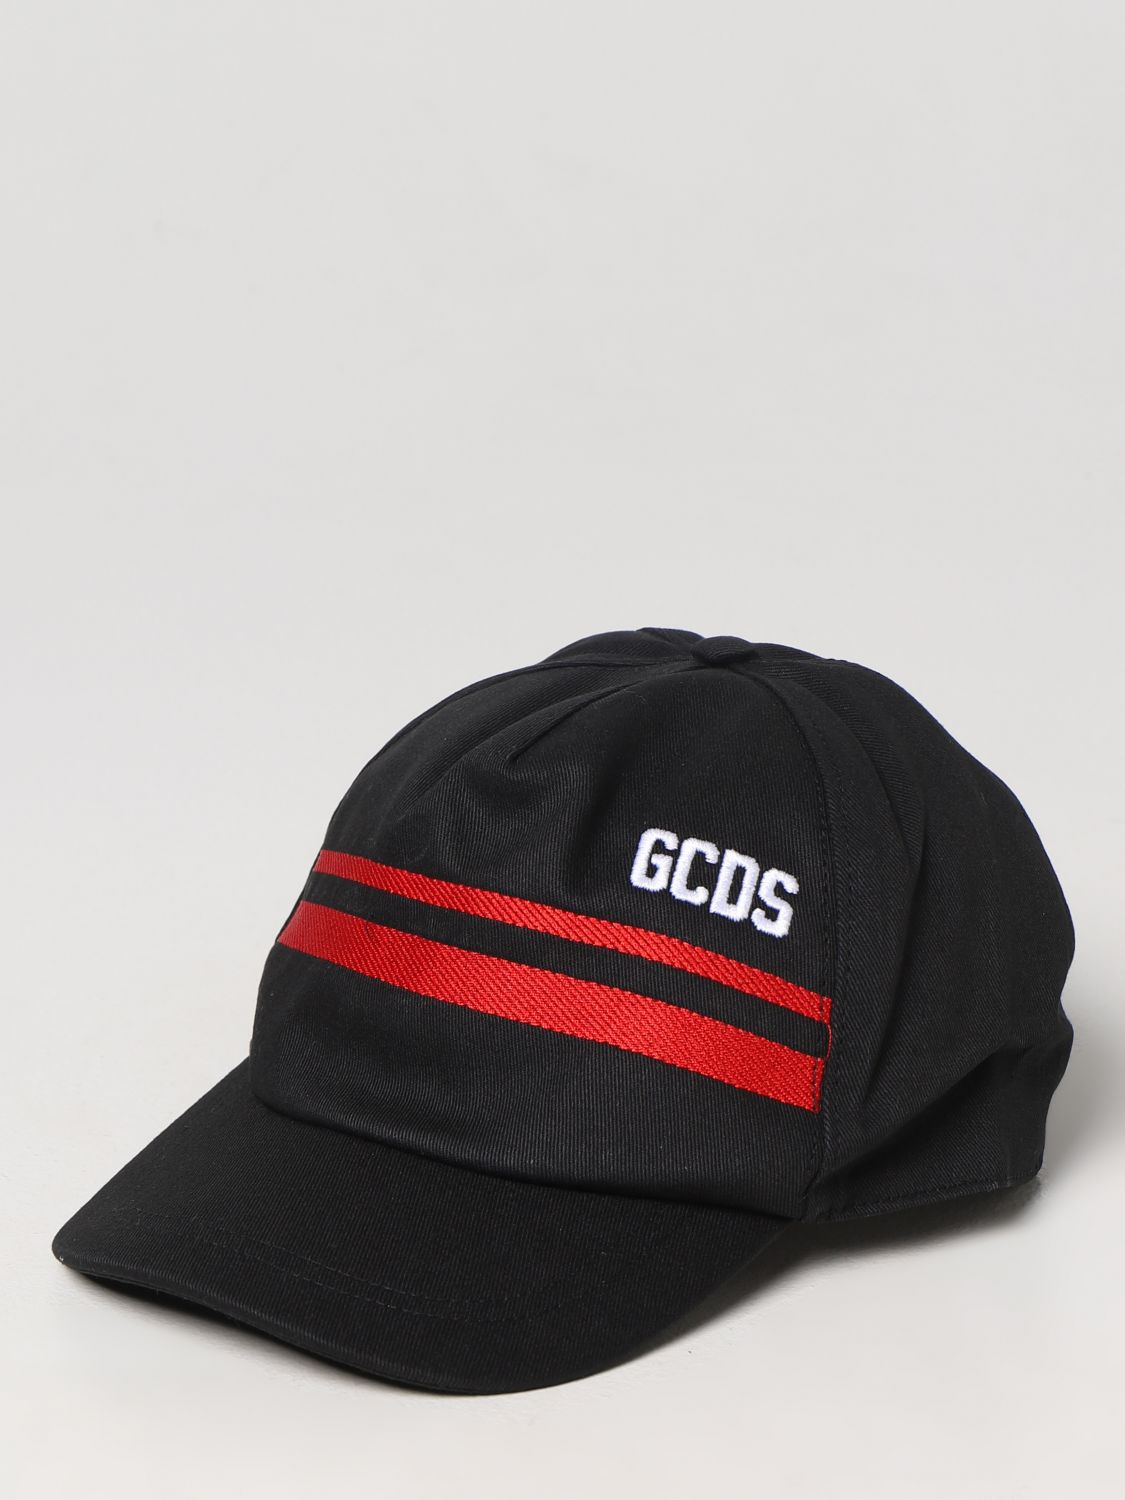 Gcds Girls' Hats  Kids Kids Colour Black